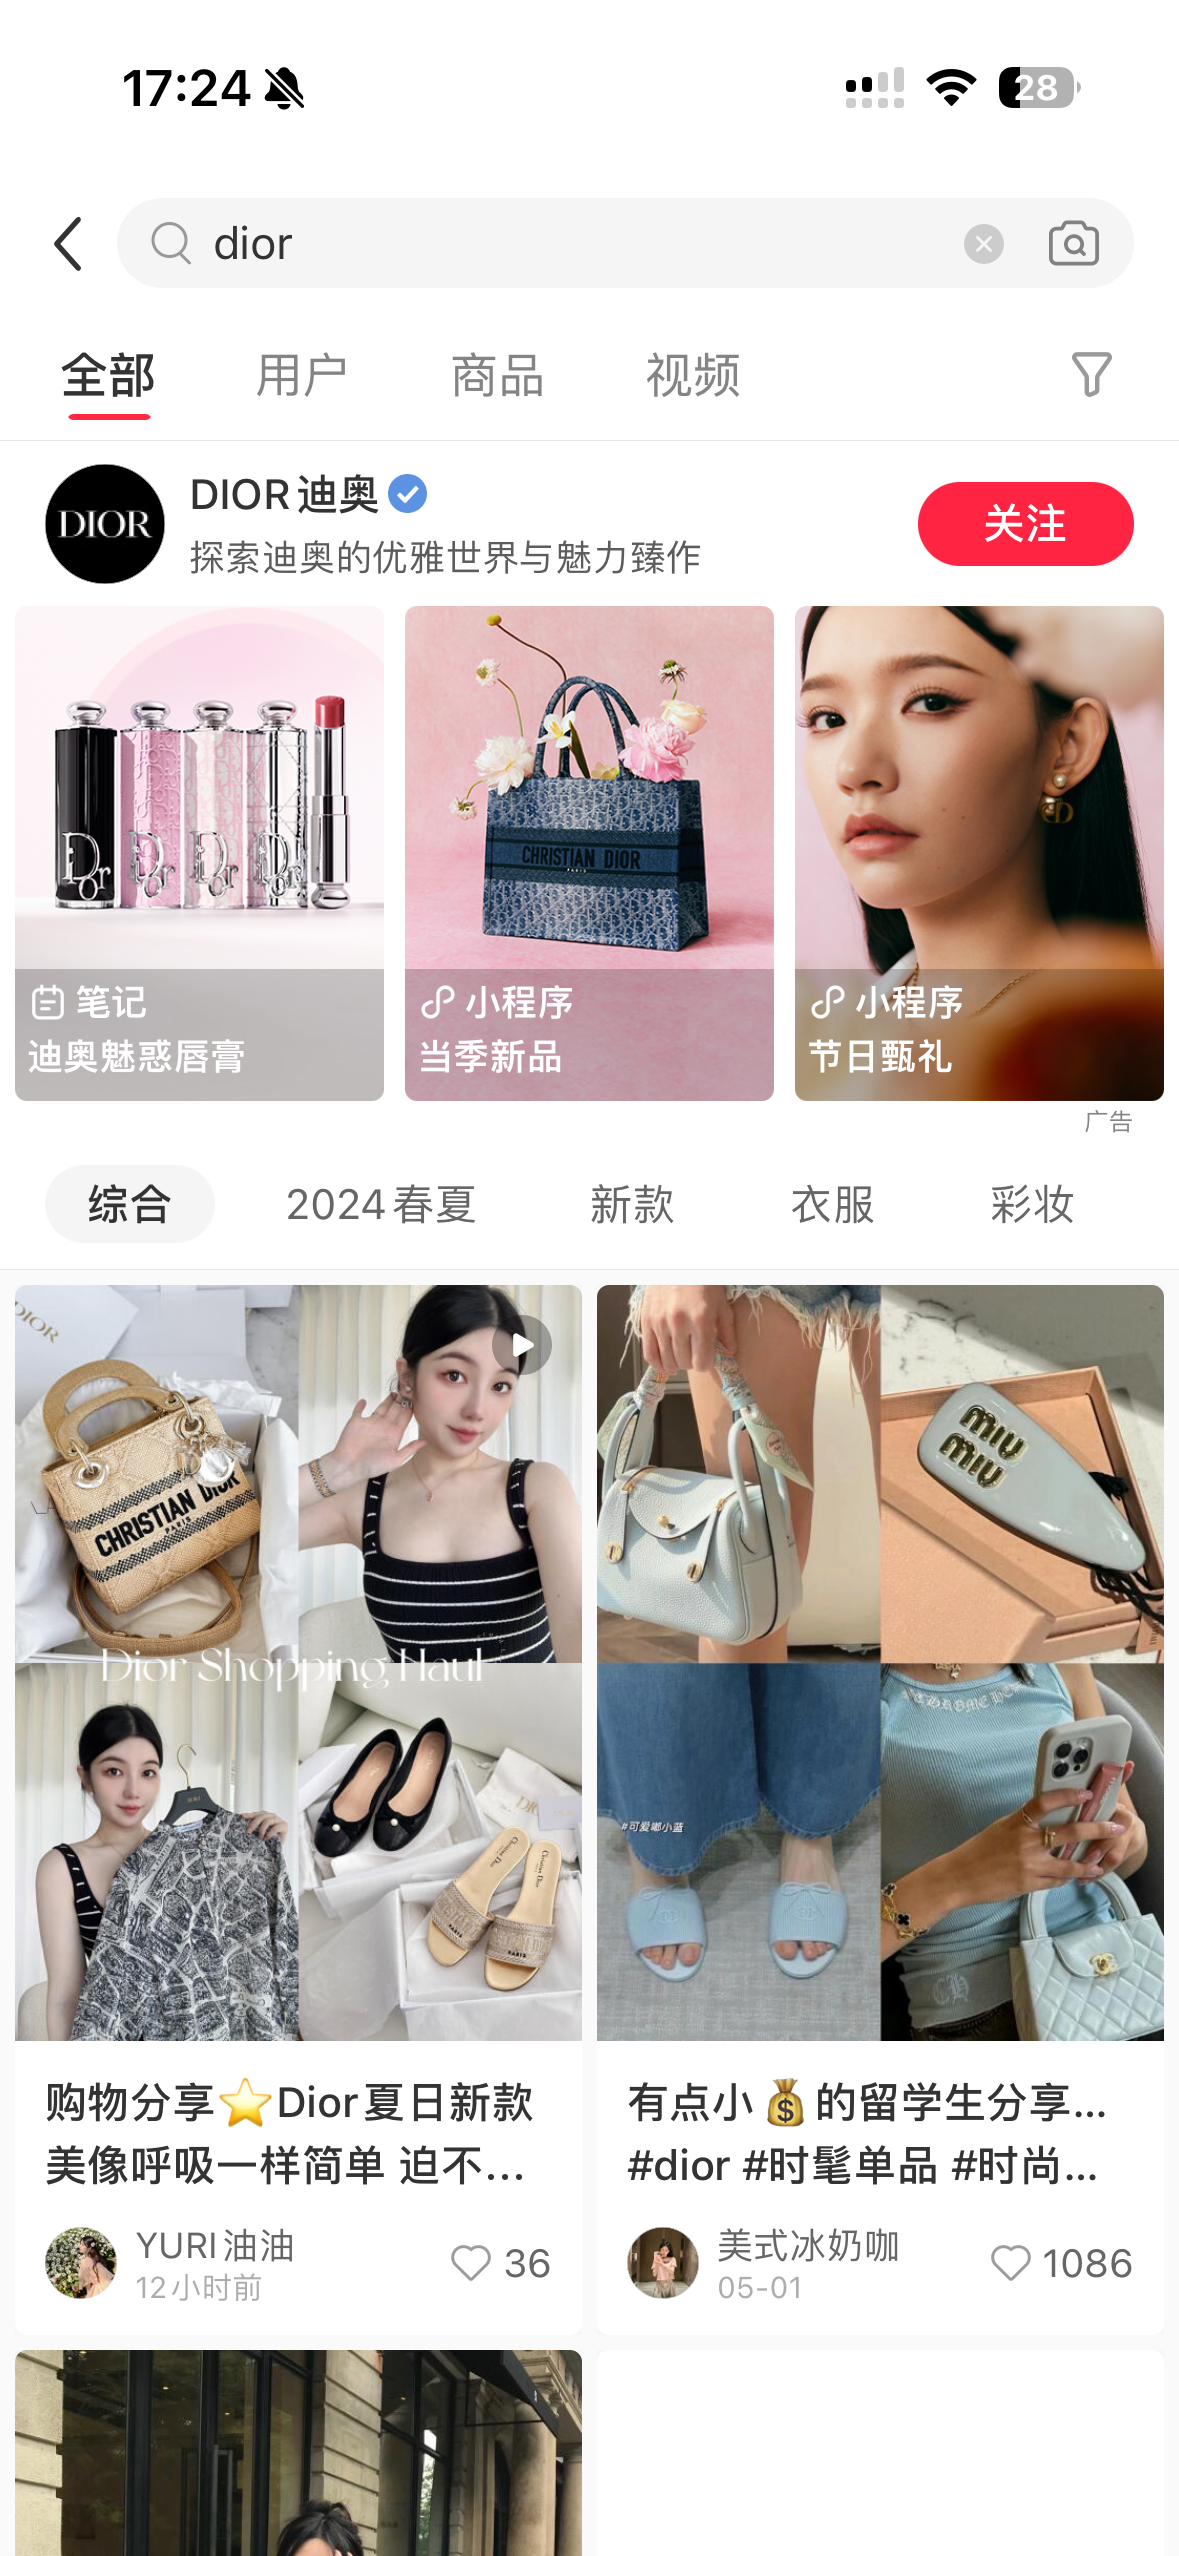 Dior has taken the lead in leveraging Xiaohongshu’s mini-program and online mall functions. Image: Dior Xiaohongshu 